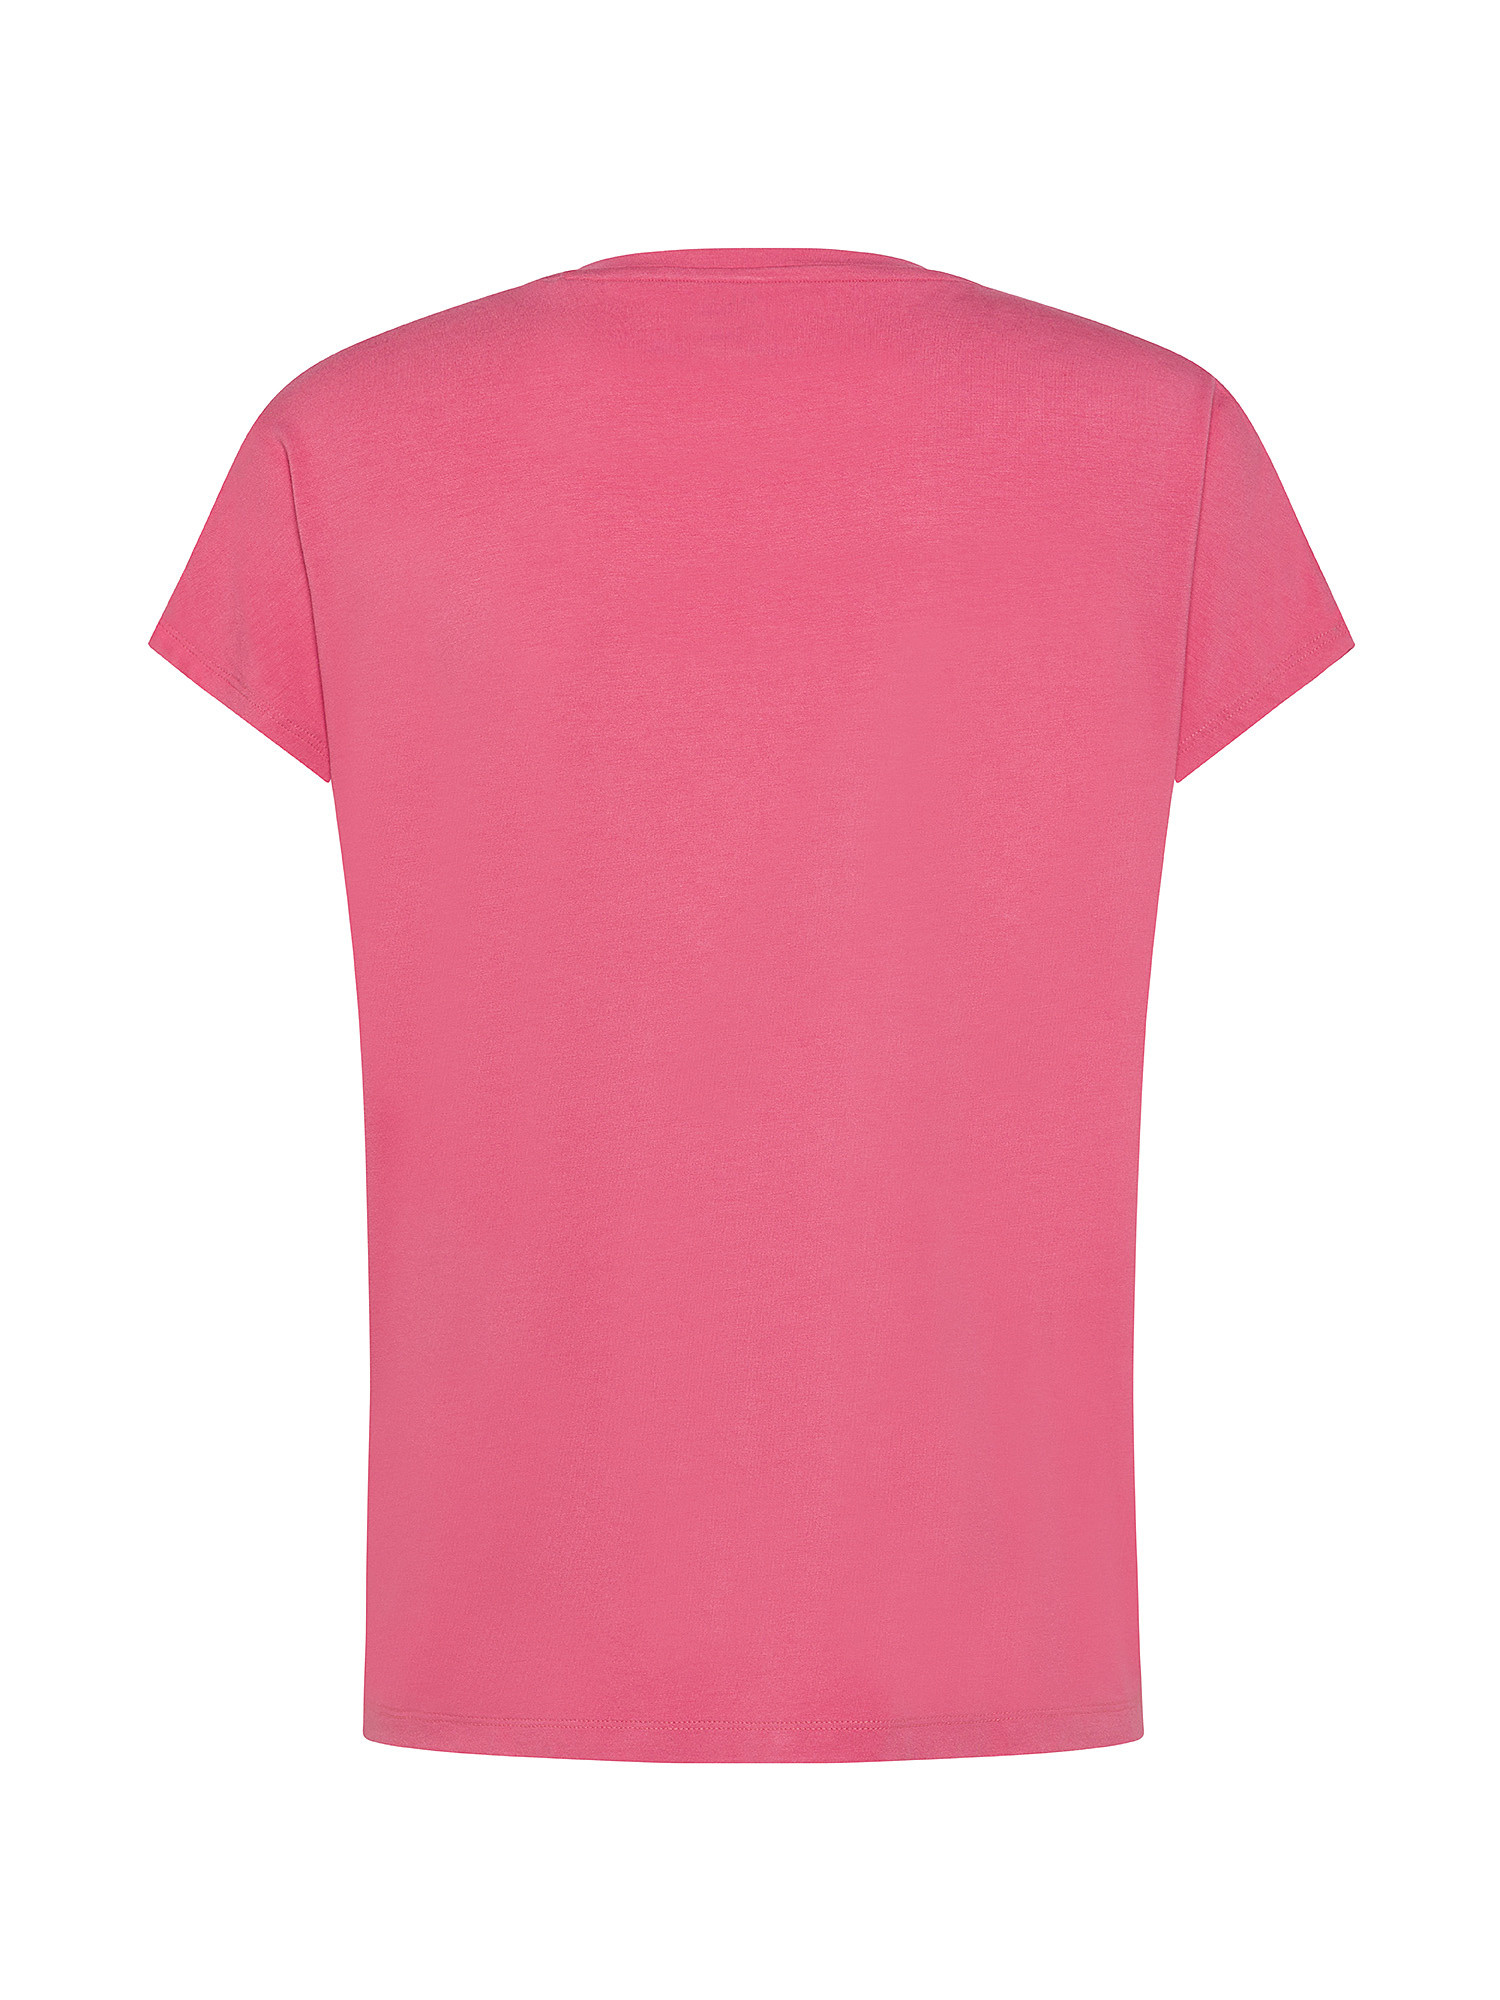 GUESS - Logo T-shirt, Pink Fuchsia, large image number 1